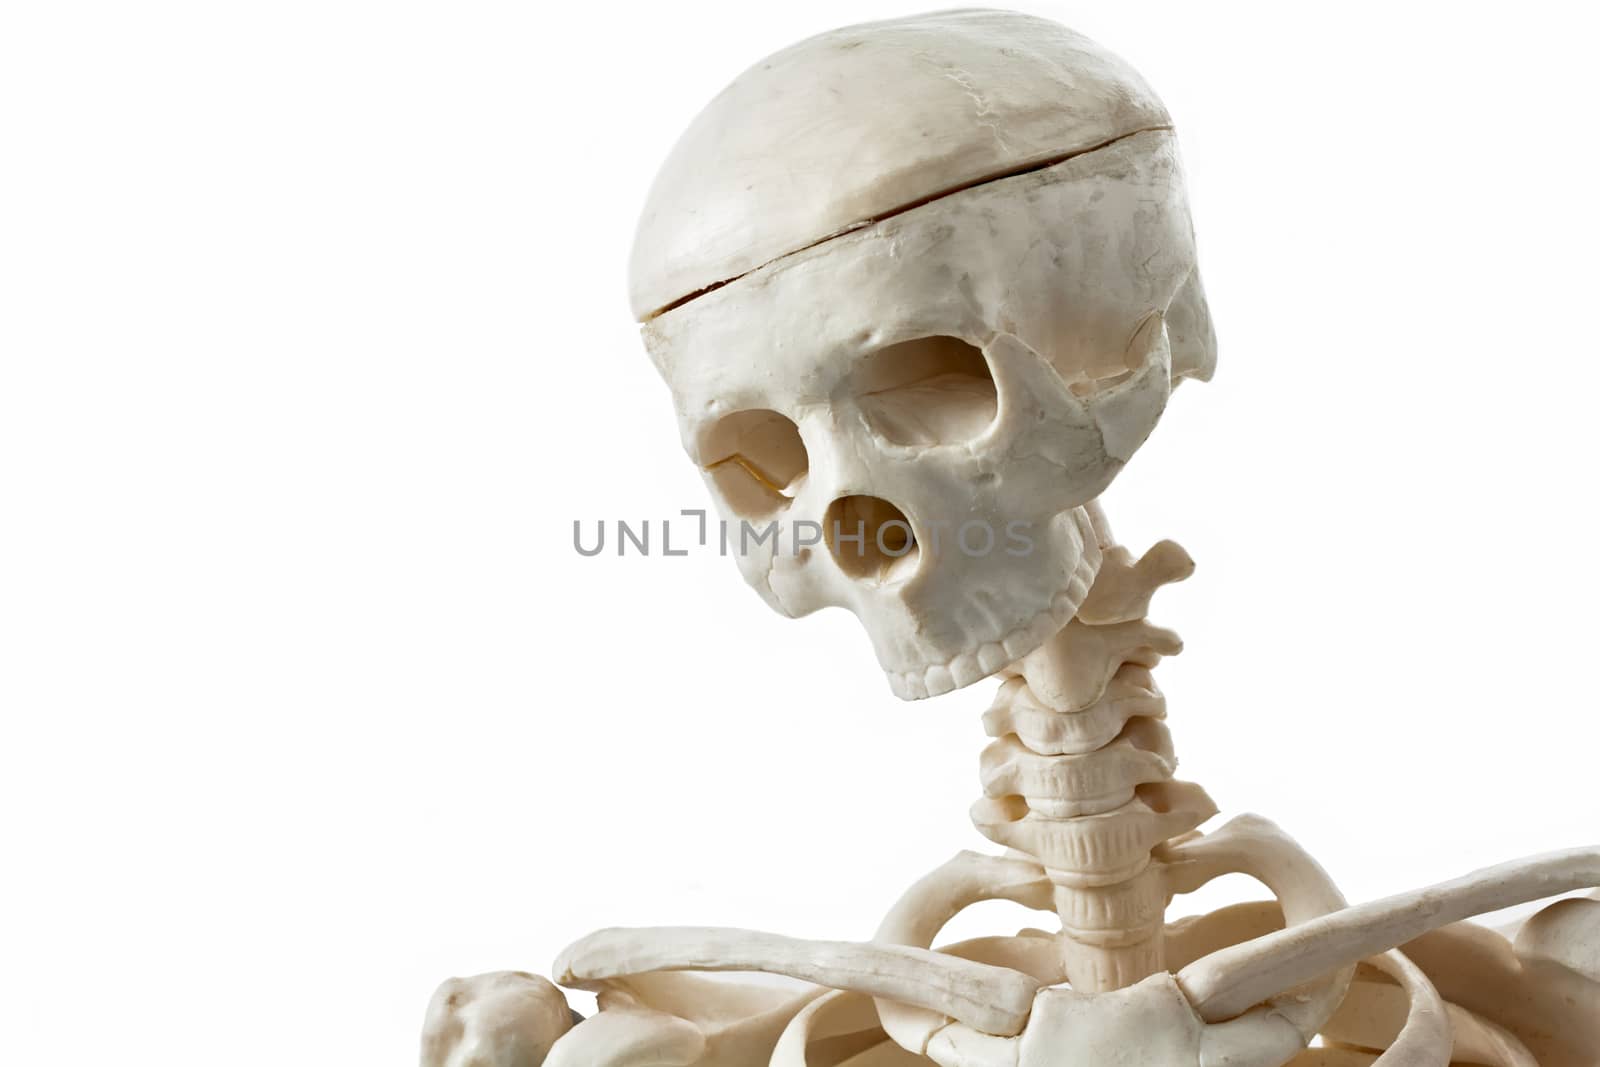 Human skeleton toy by EnzoArt